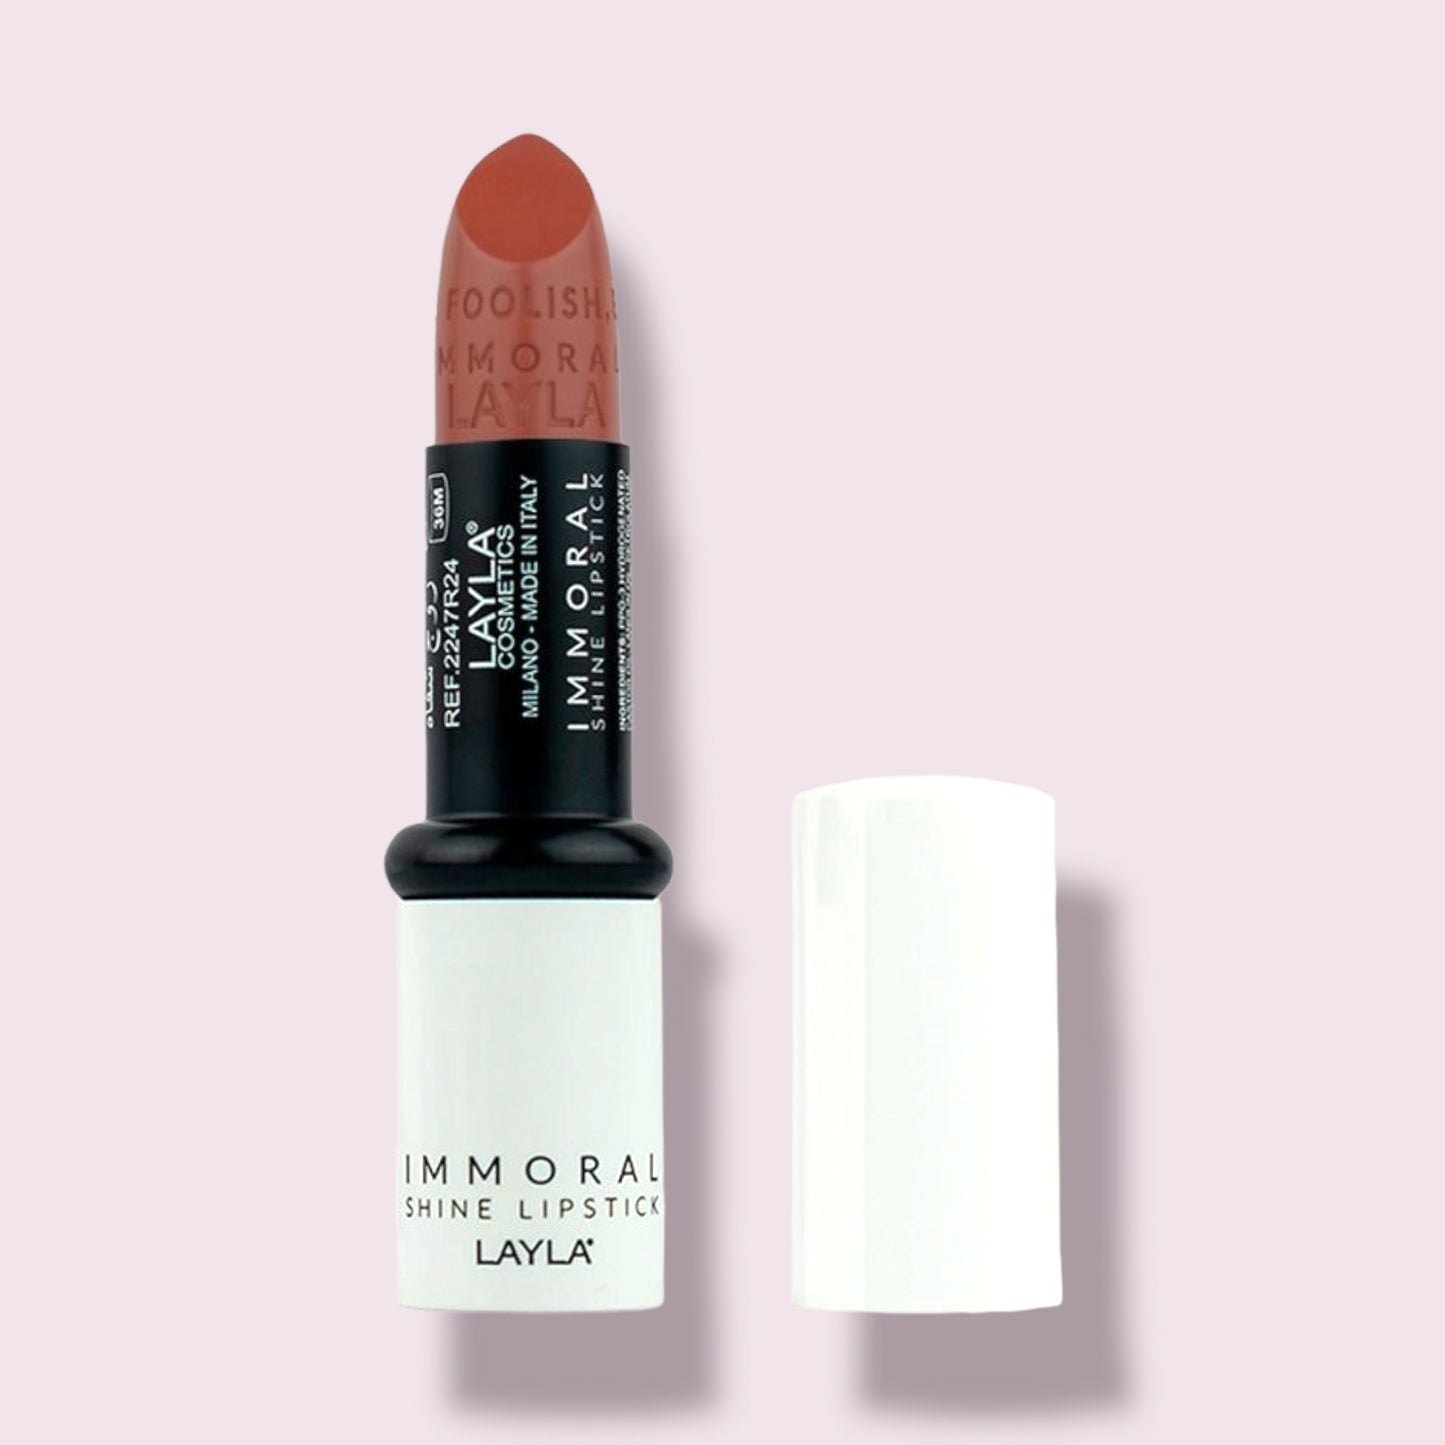 Immoral Shine Lipstick 23